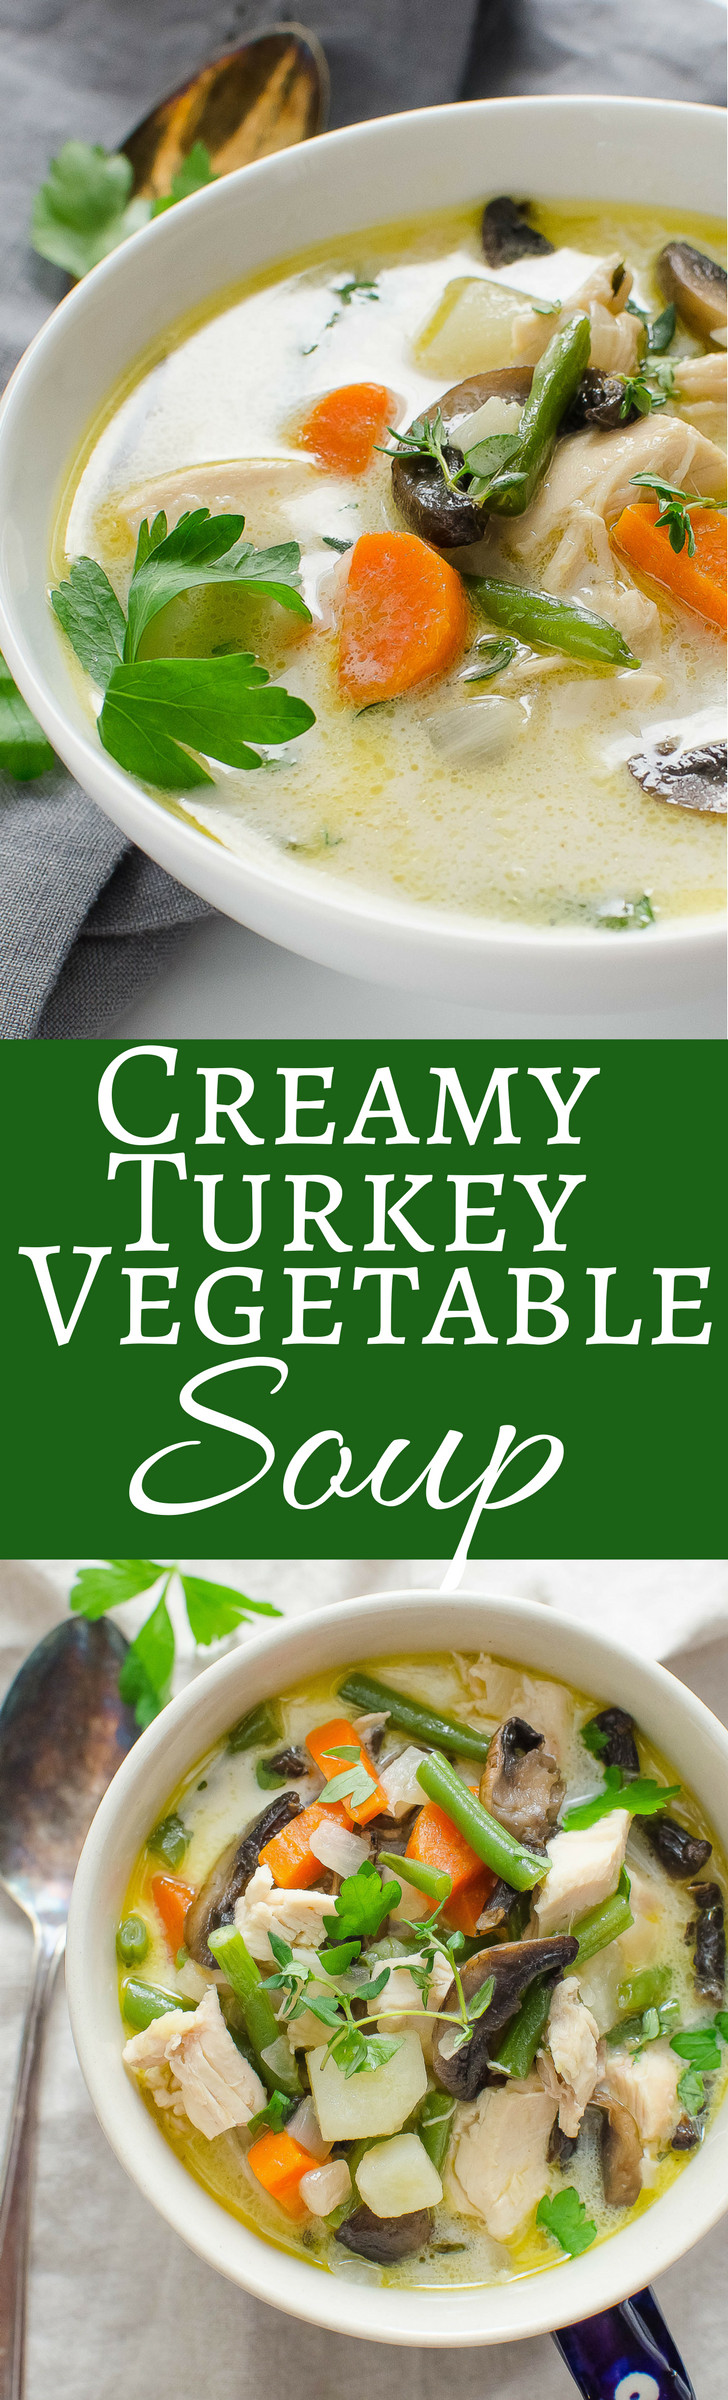 Homemade Turkey Vegetable Soup
 Creamy Turkey Ve able Soup Recipe